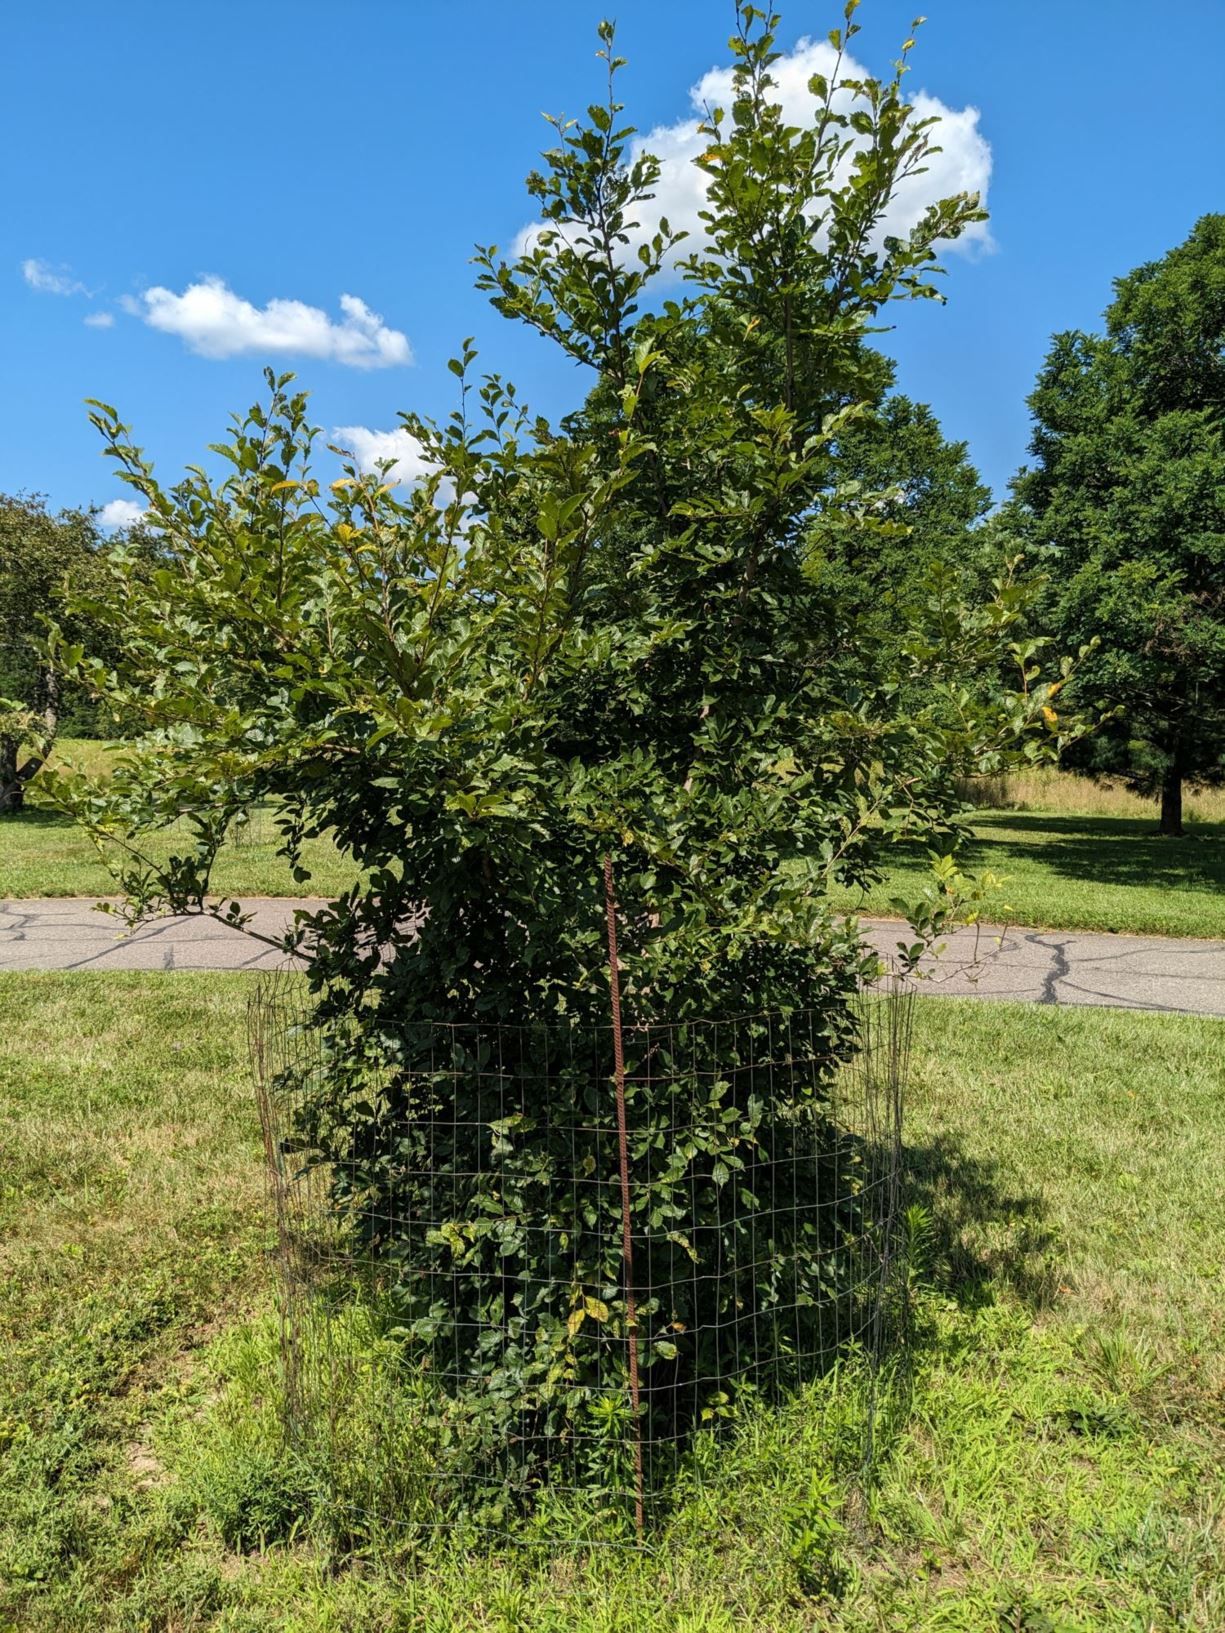 Ulmus davidiana var. japonica - Japanese elm, chalkbark elm, Wilson elm